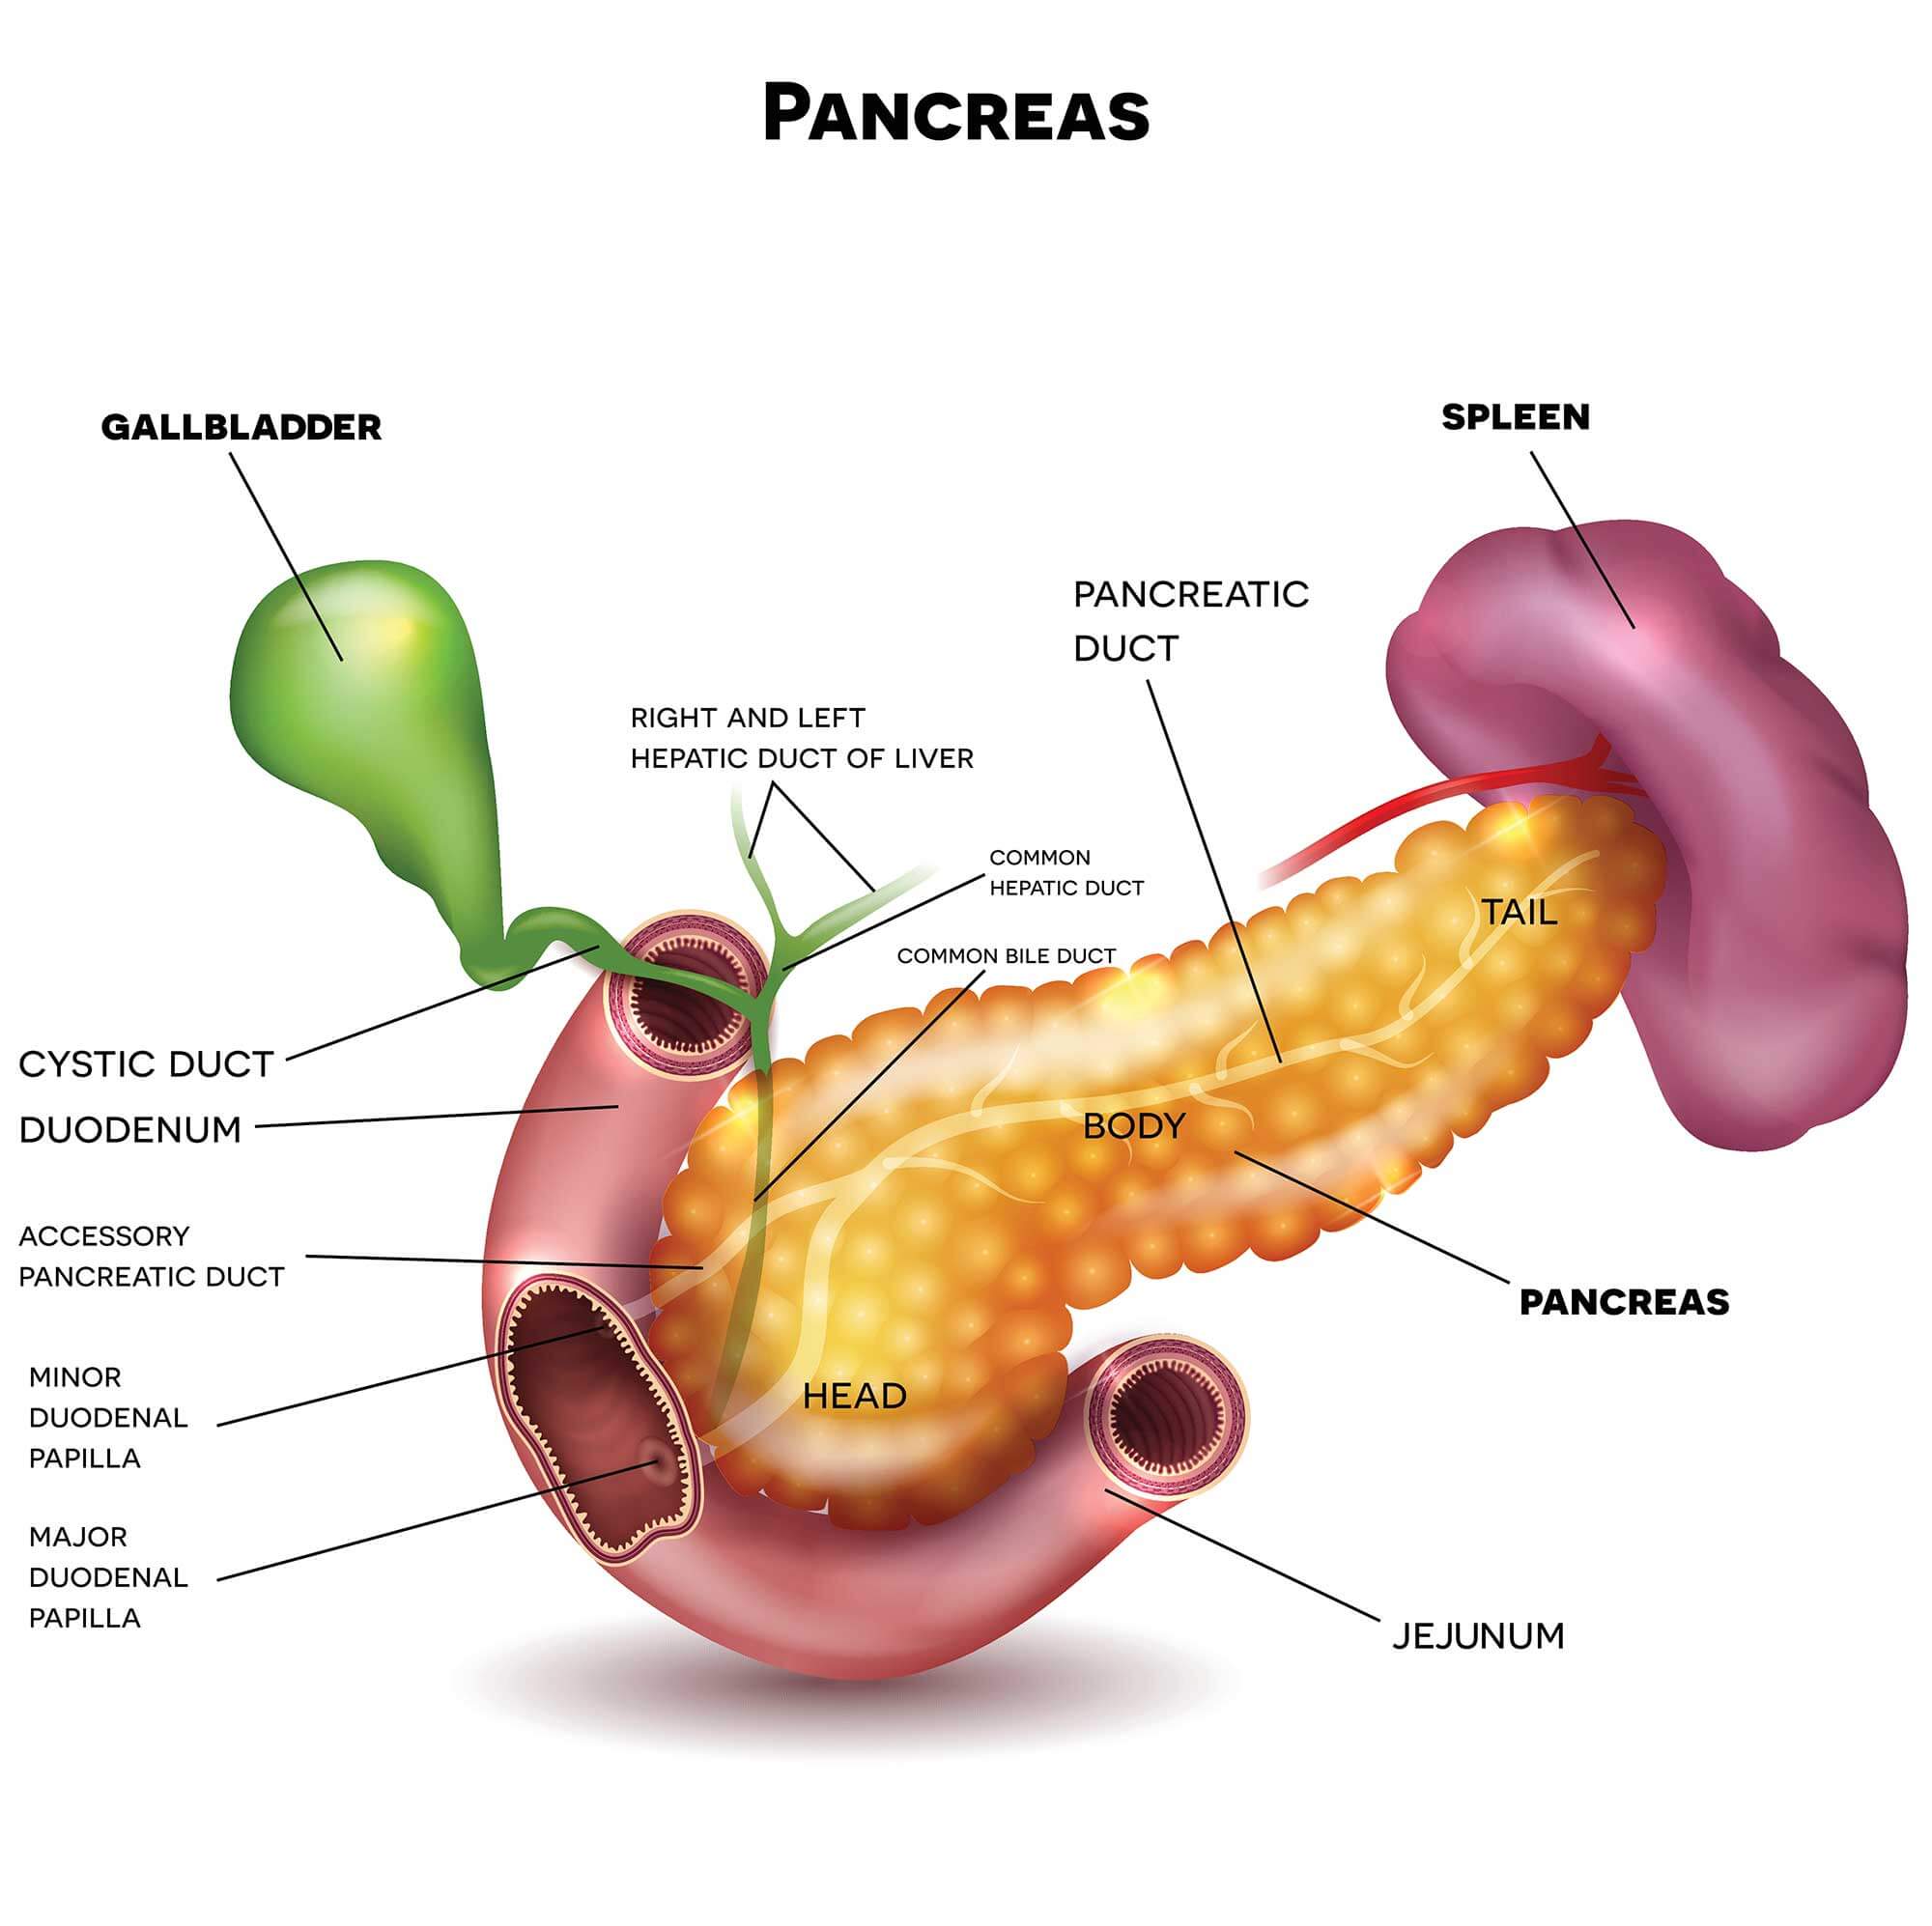 Cancer pancreatic symptoms - Pancreatic cancer first symptoms were